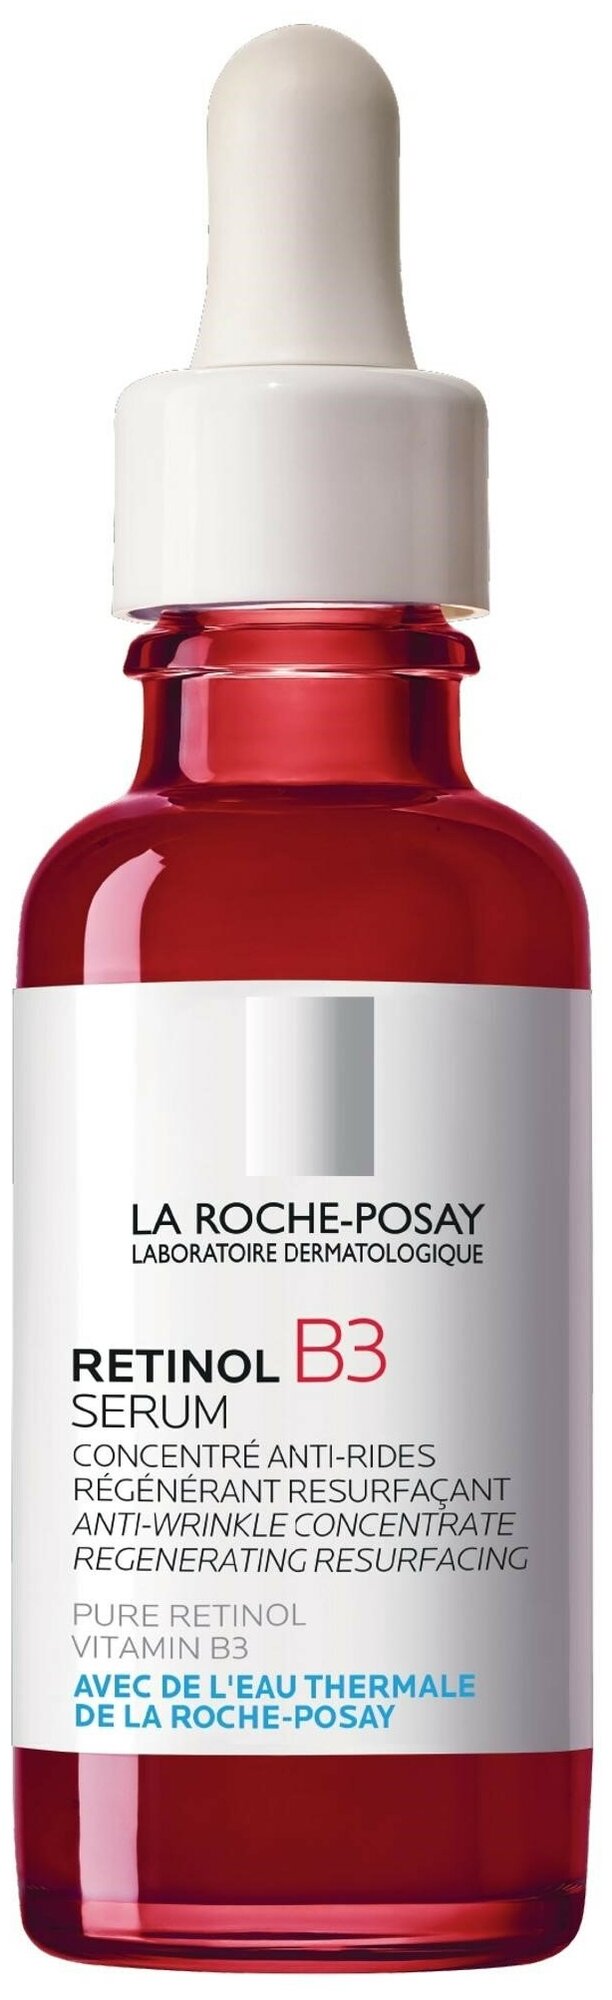 Сыворотка LA ROCHE POSAY Retinol B3, 30 мл